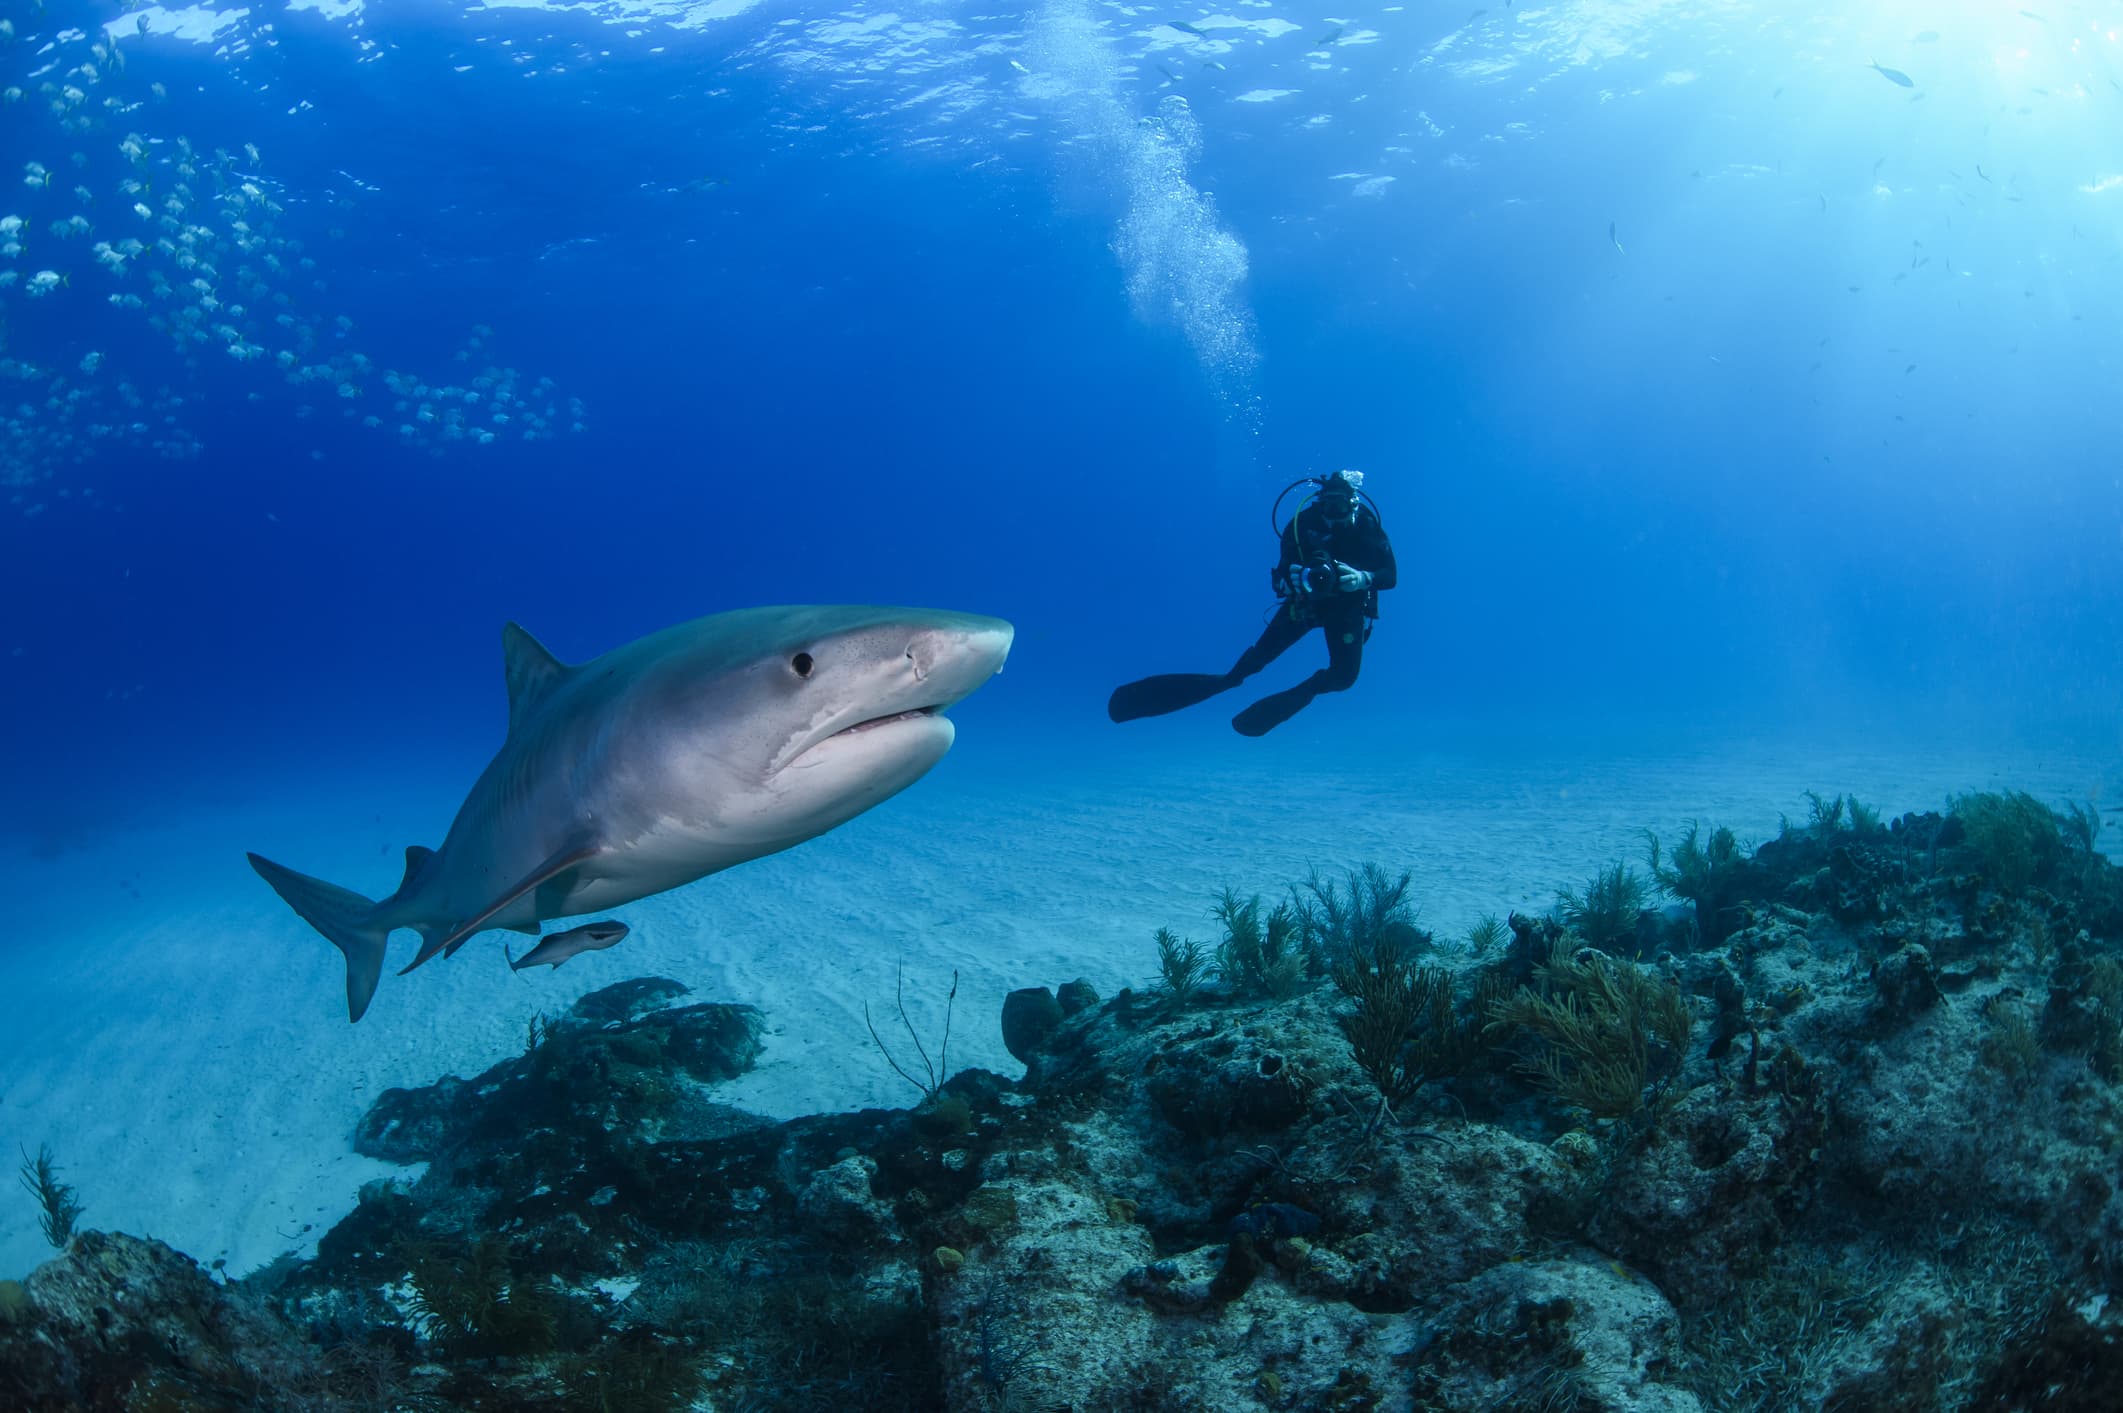 A diver swims near a tiger shark